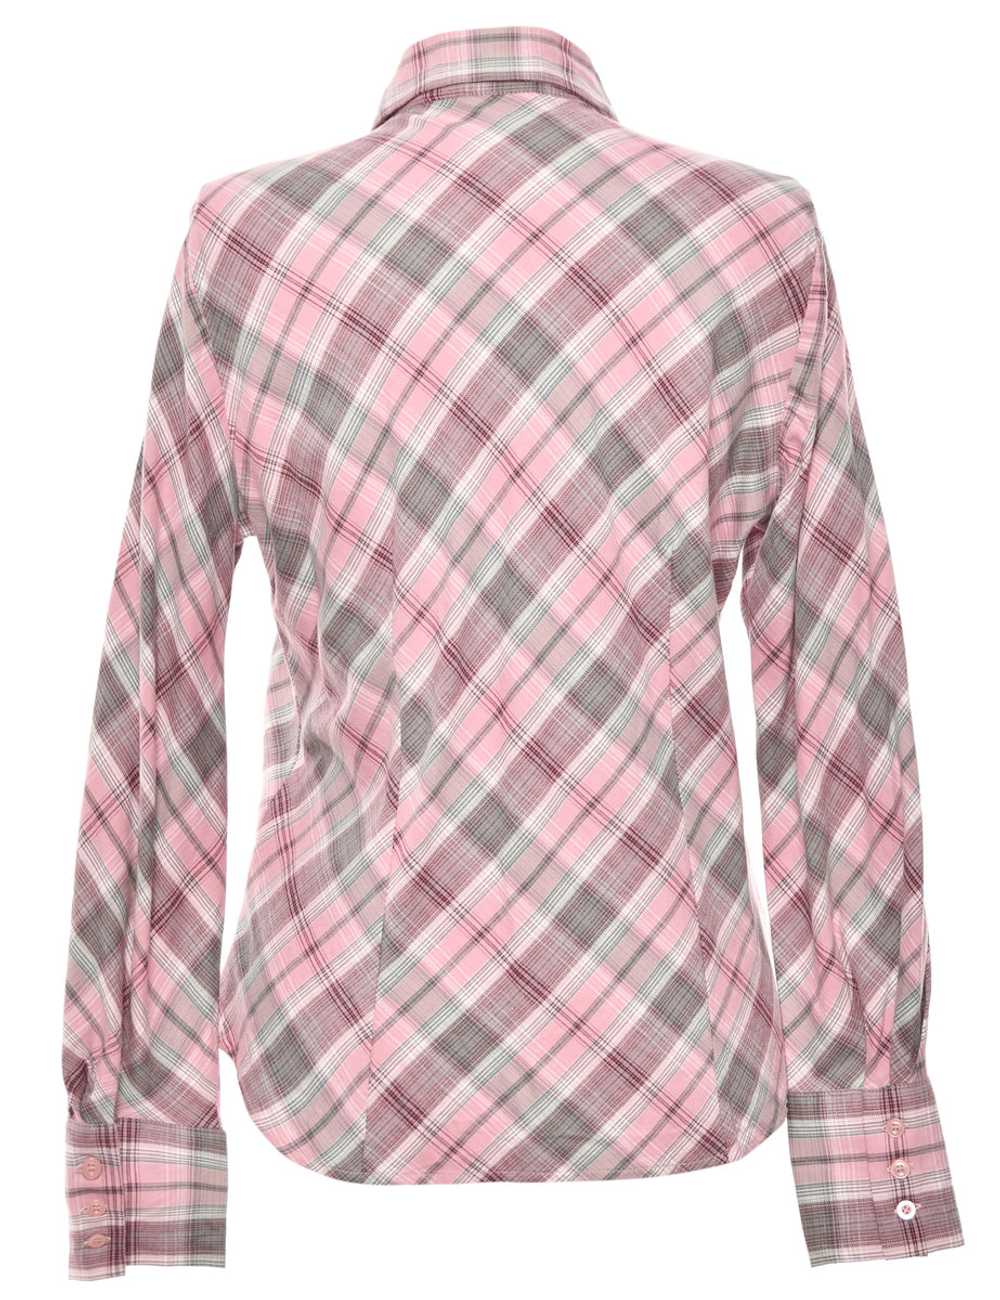 Checked Pink Shirt - M - image 2